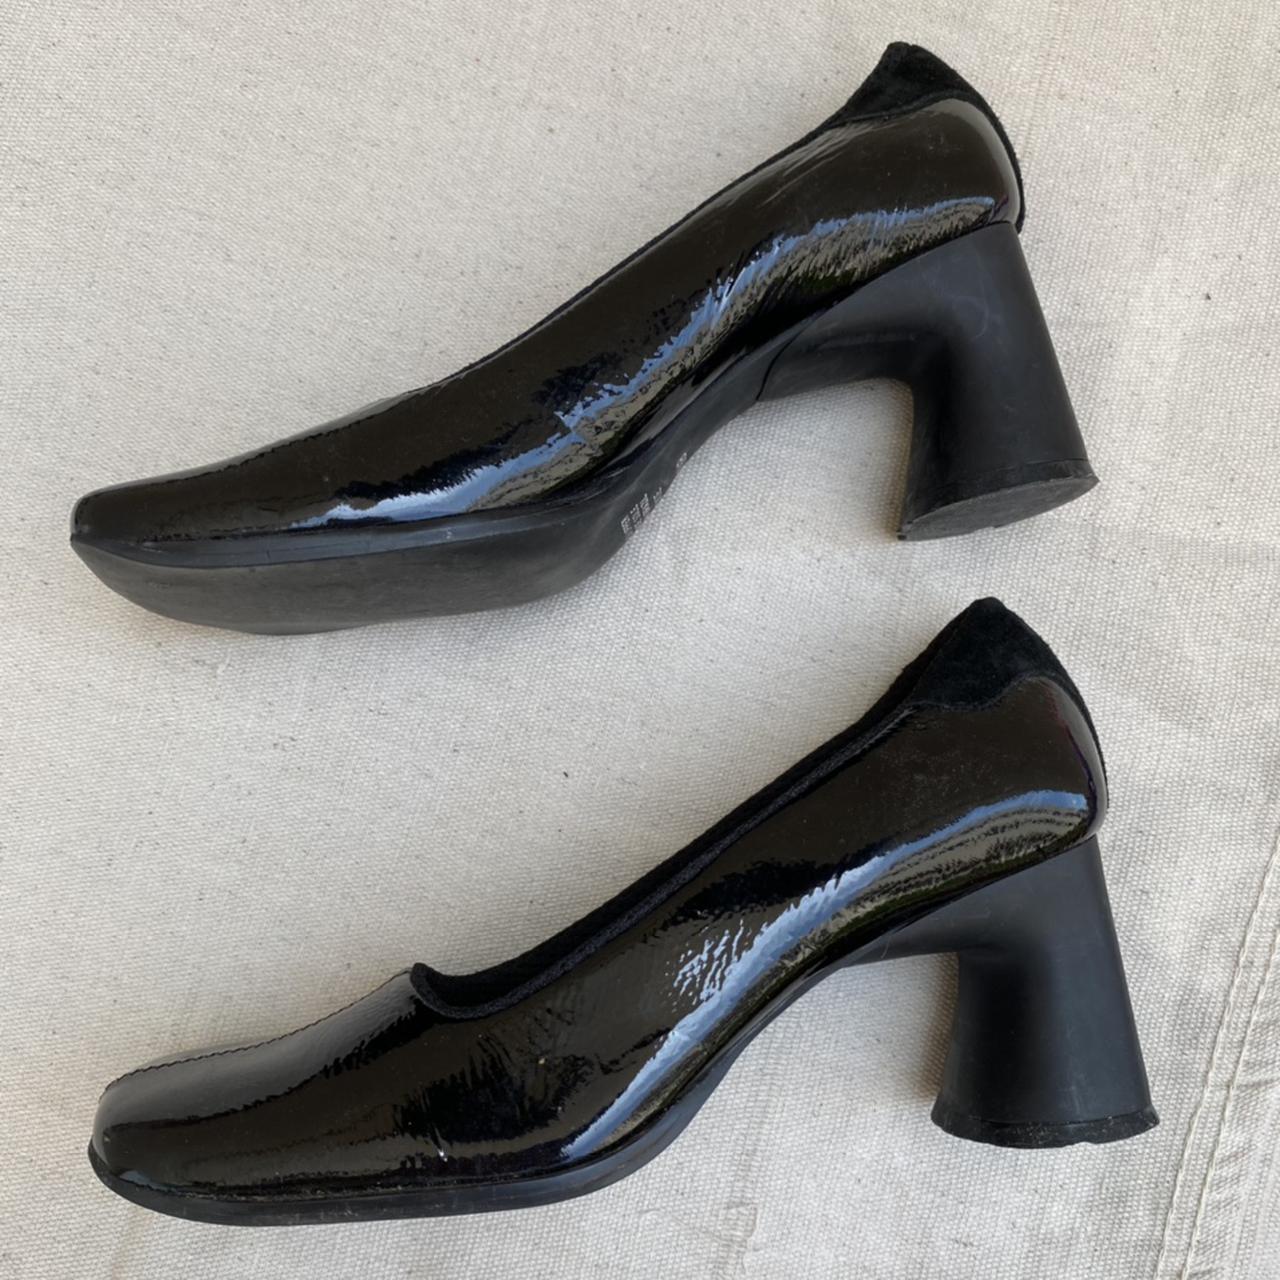 Black patent leather Mary Jane type heels